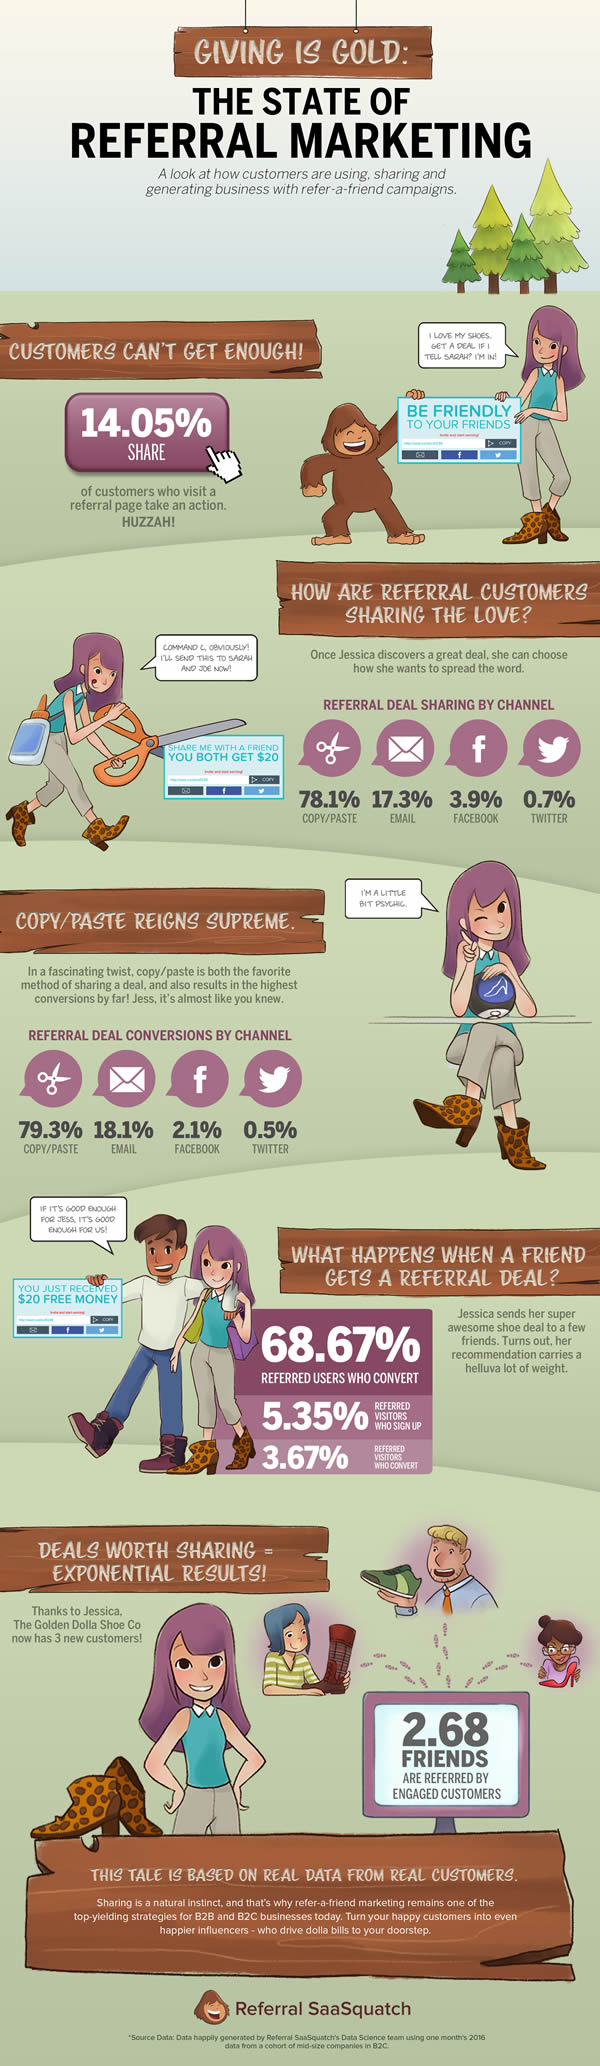 referral-marketing-statistics-infographic-full-size